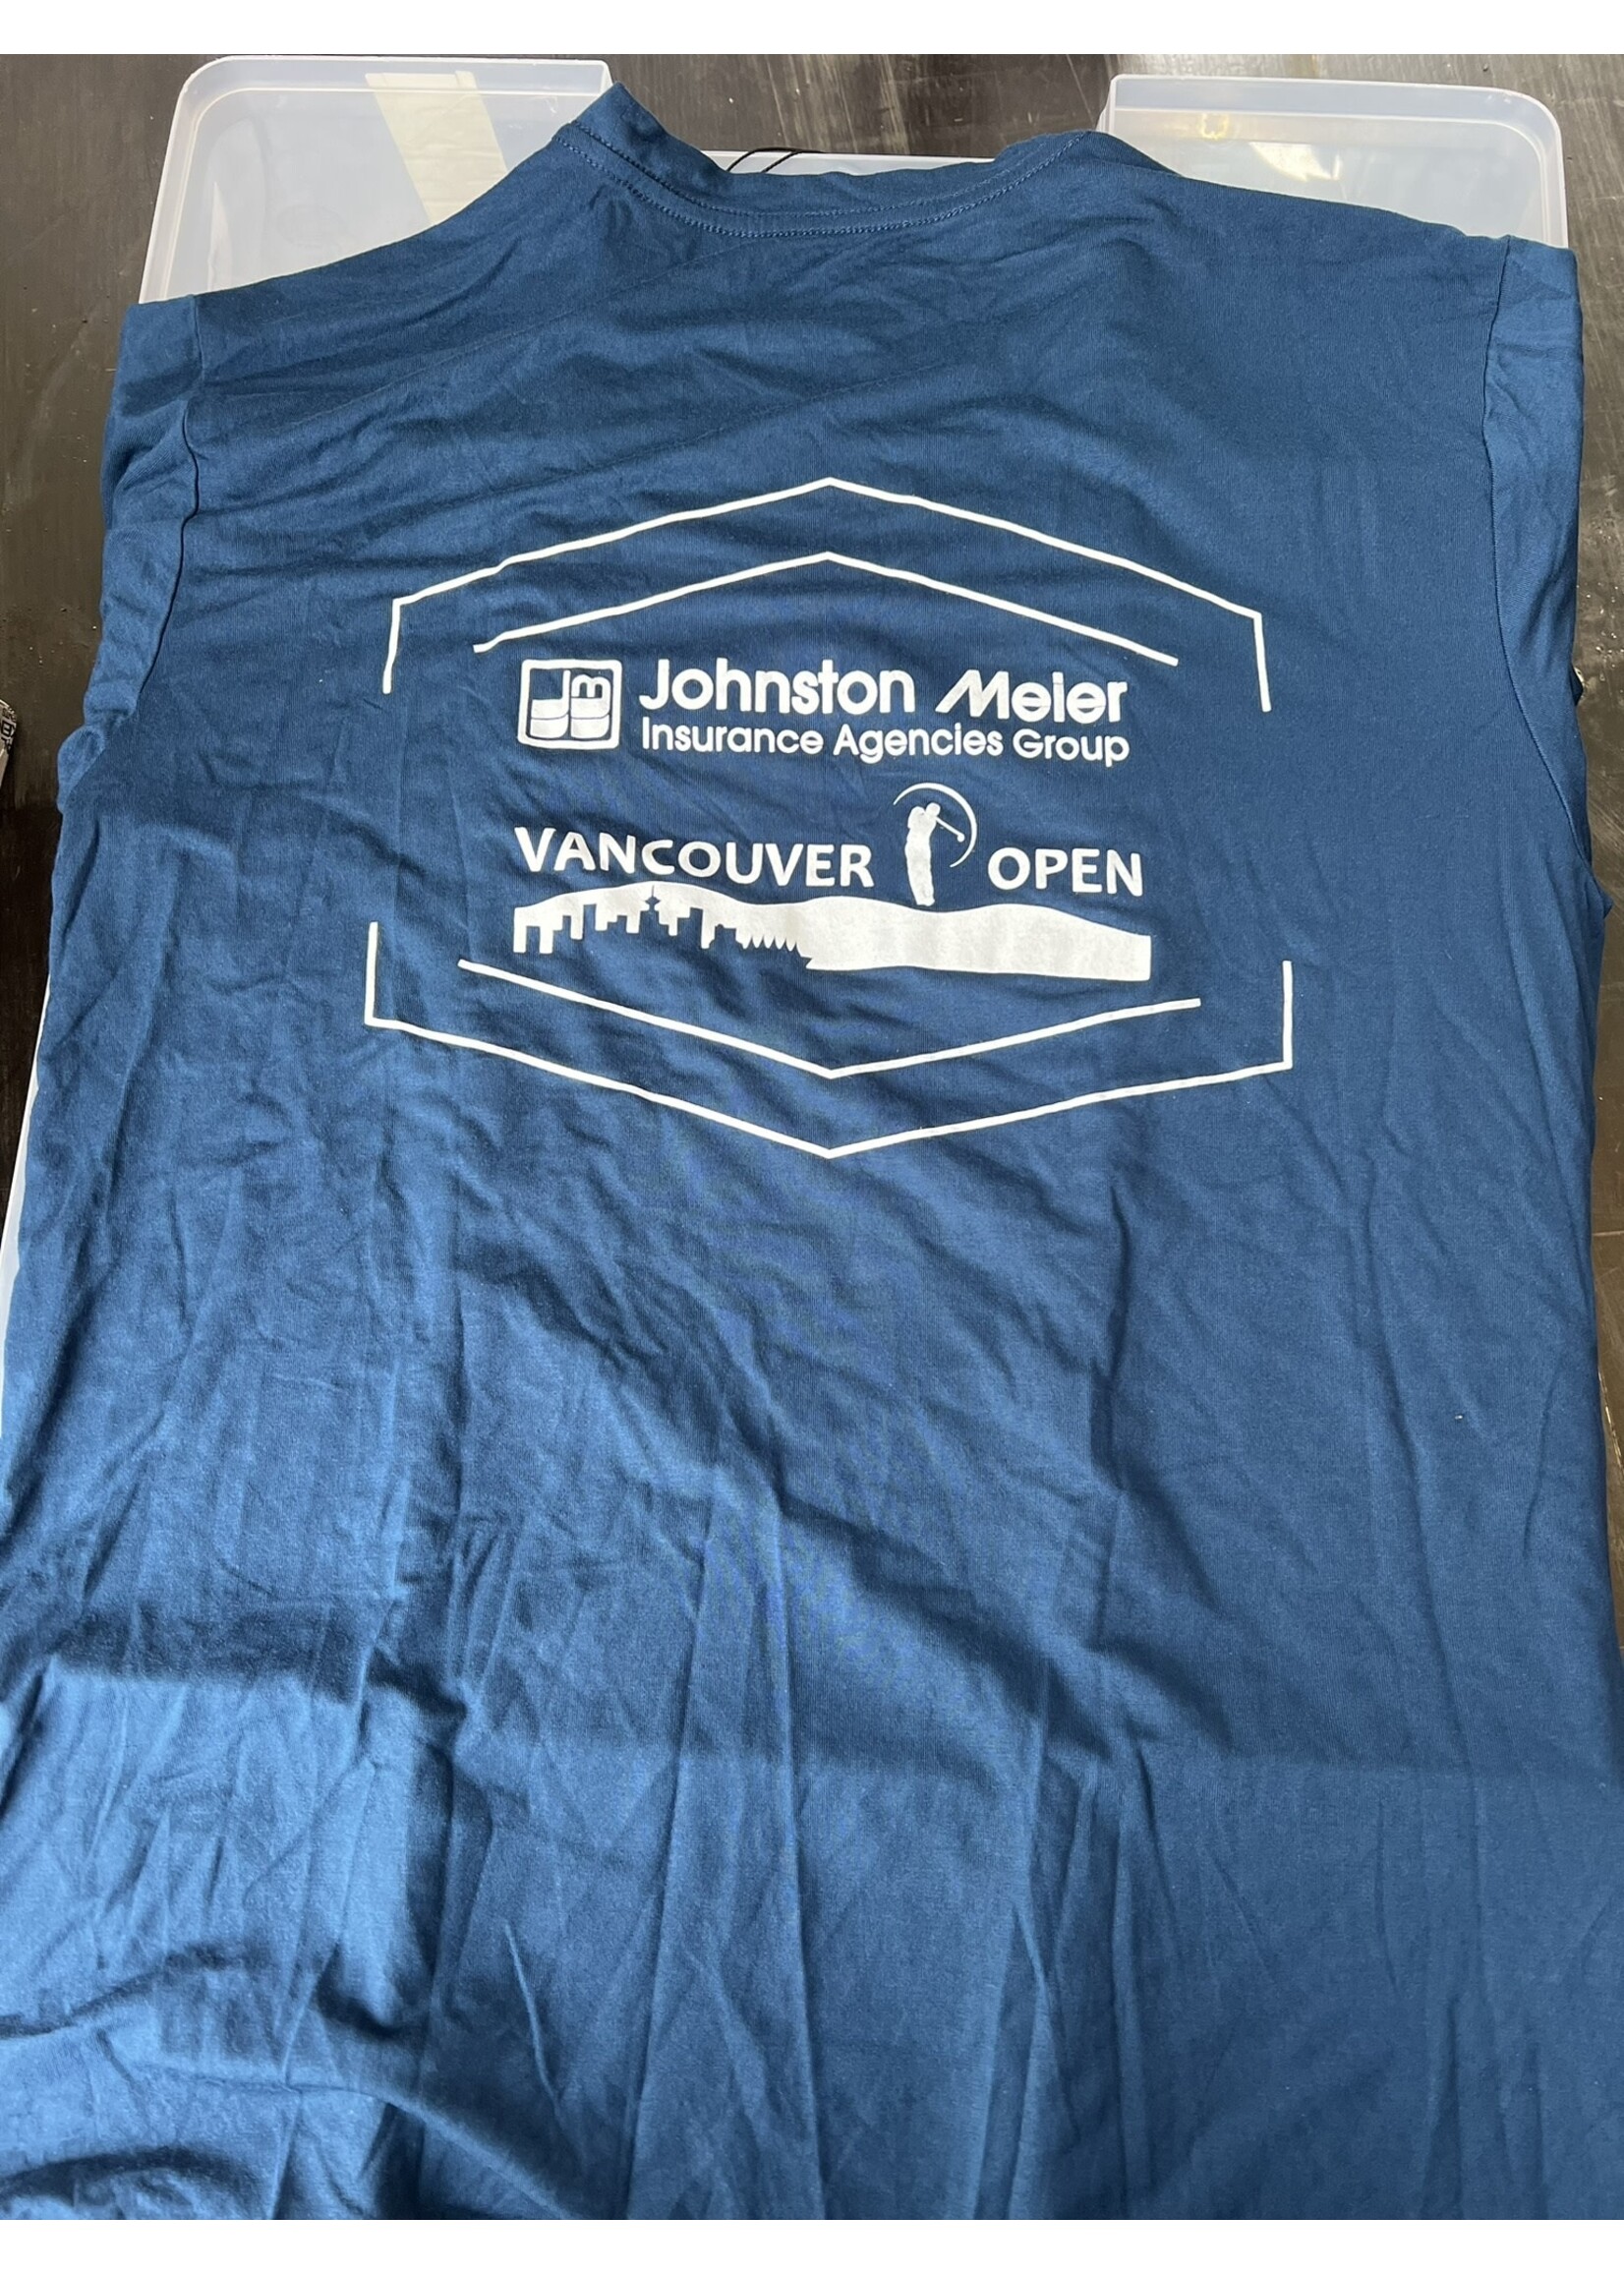 Johnston Meier 2Undr Vancouver Open Tee Shirts